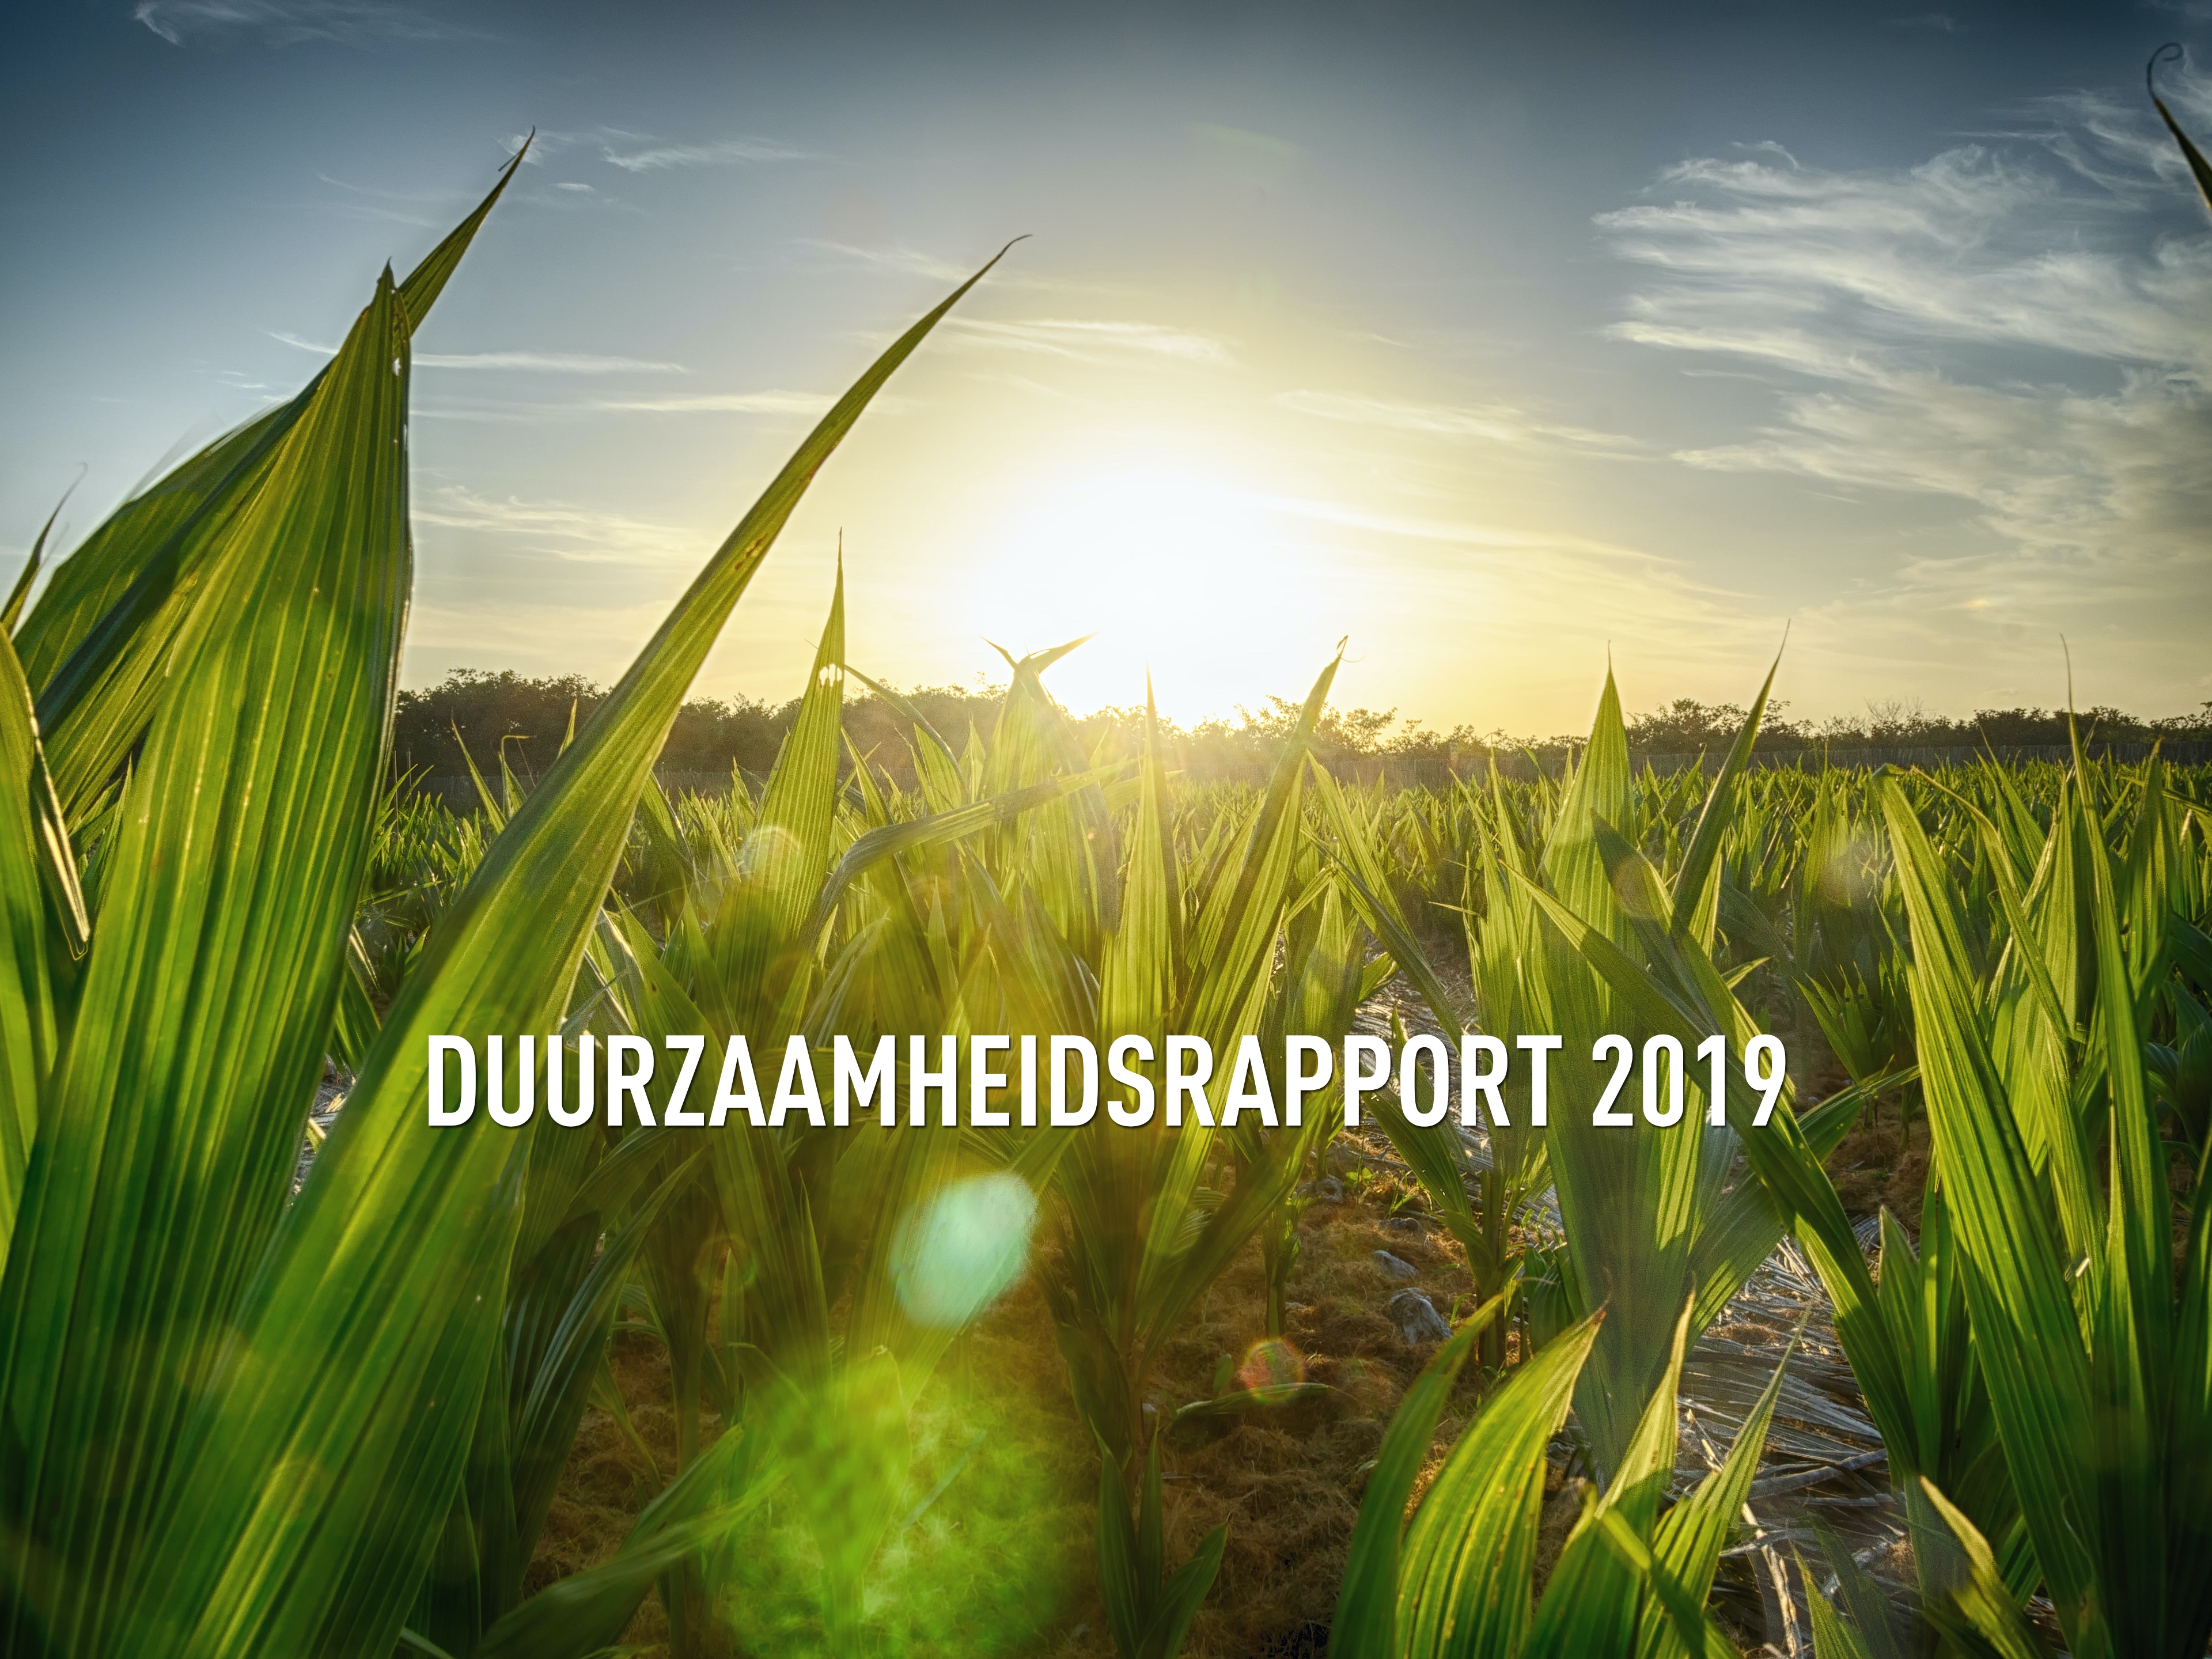 Duurzaamheidsrapport 2019